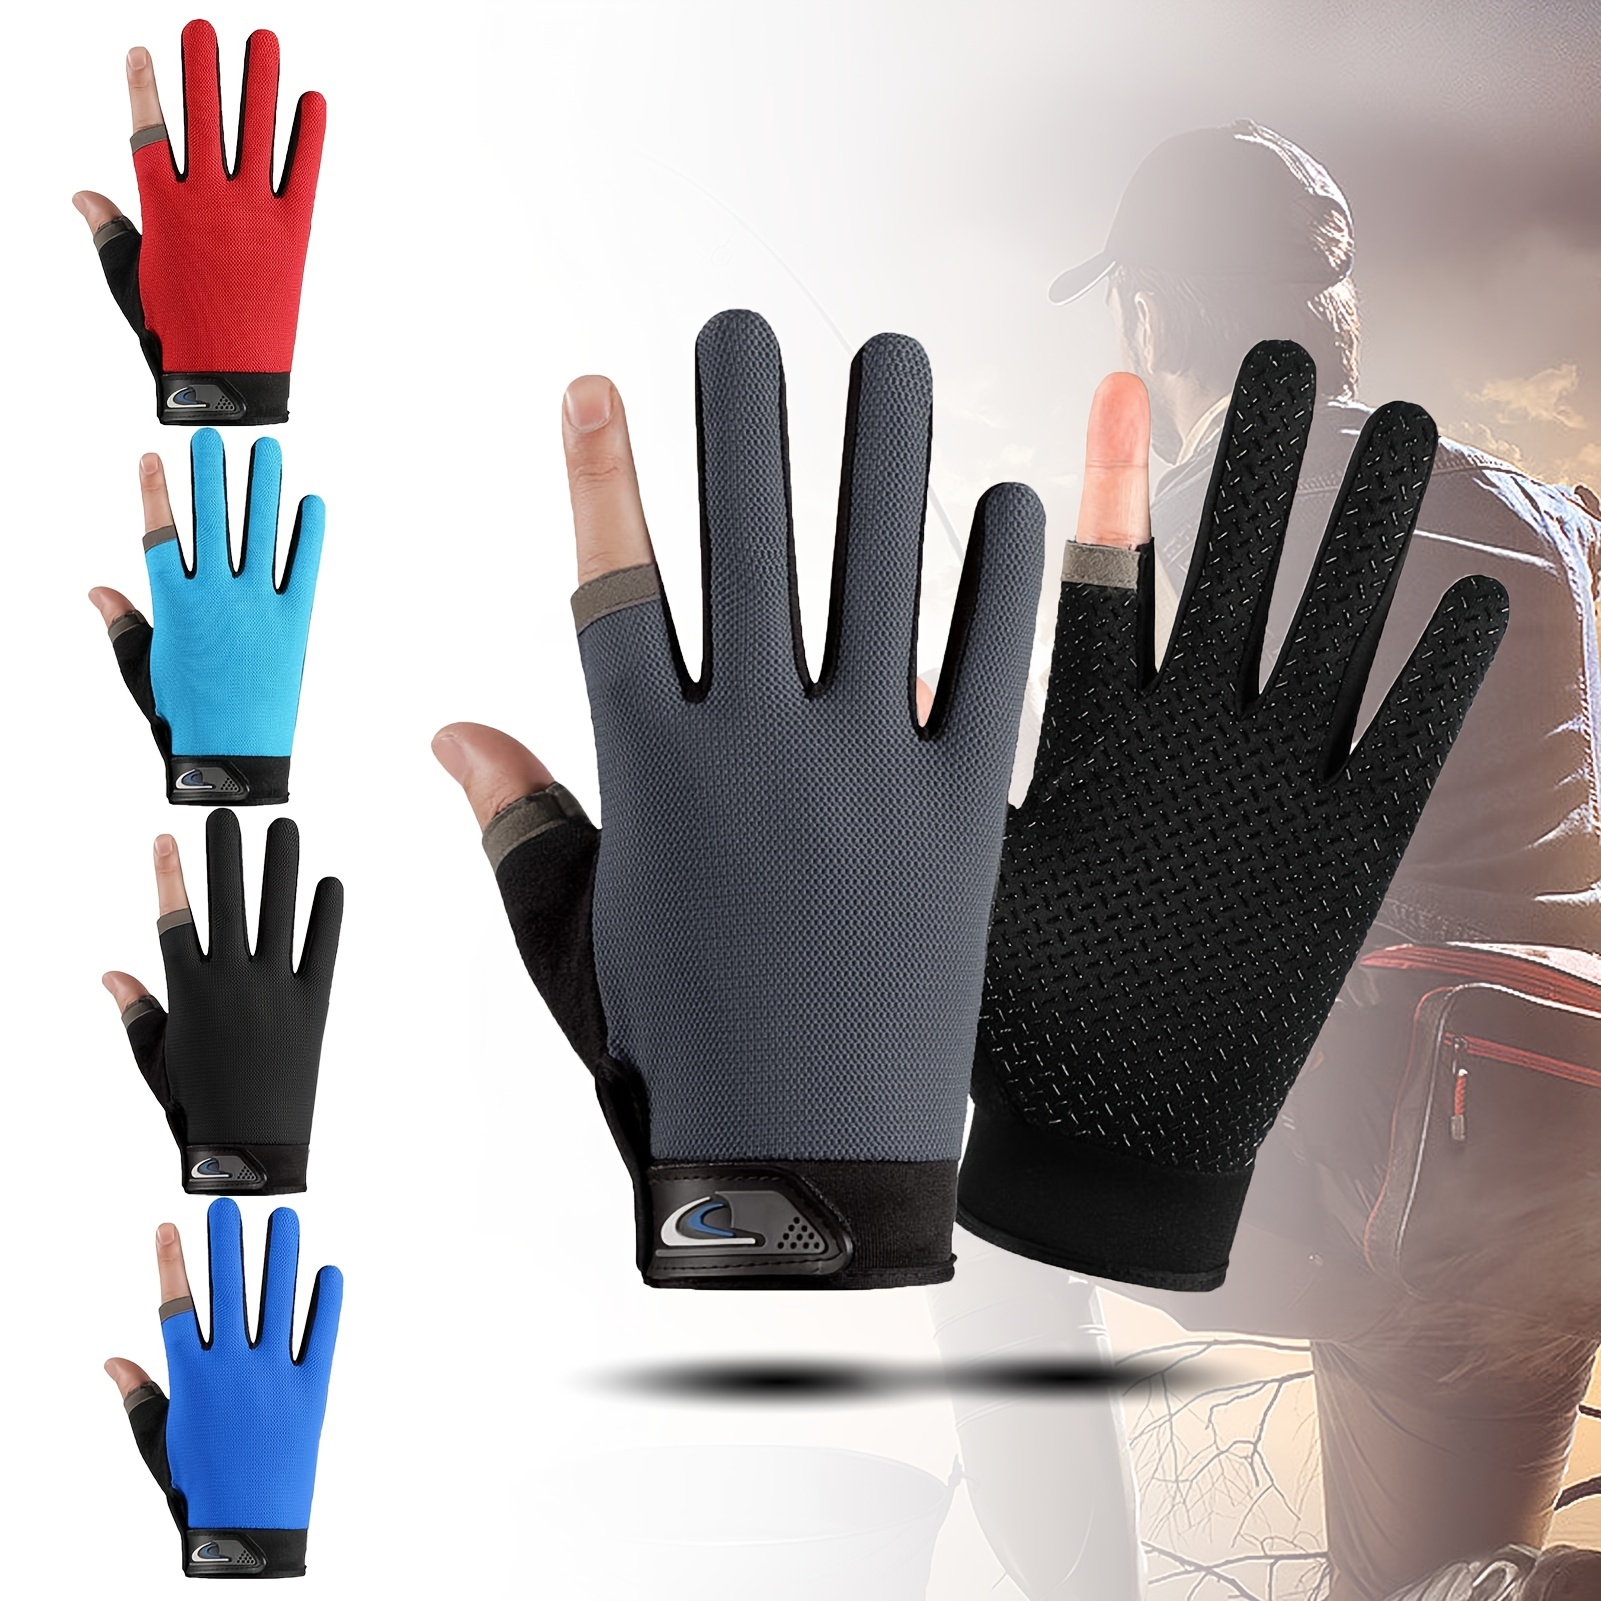 Goture Anti-slip Waterproof Fishing Gloves 2 Cut Finger Gloves for Fishing  Hunting Riding Cycling EU